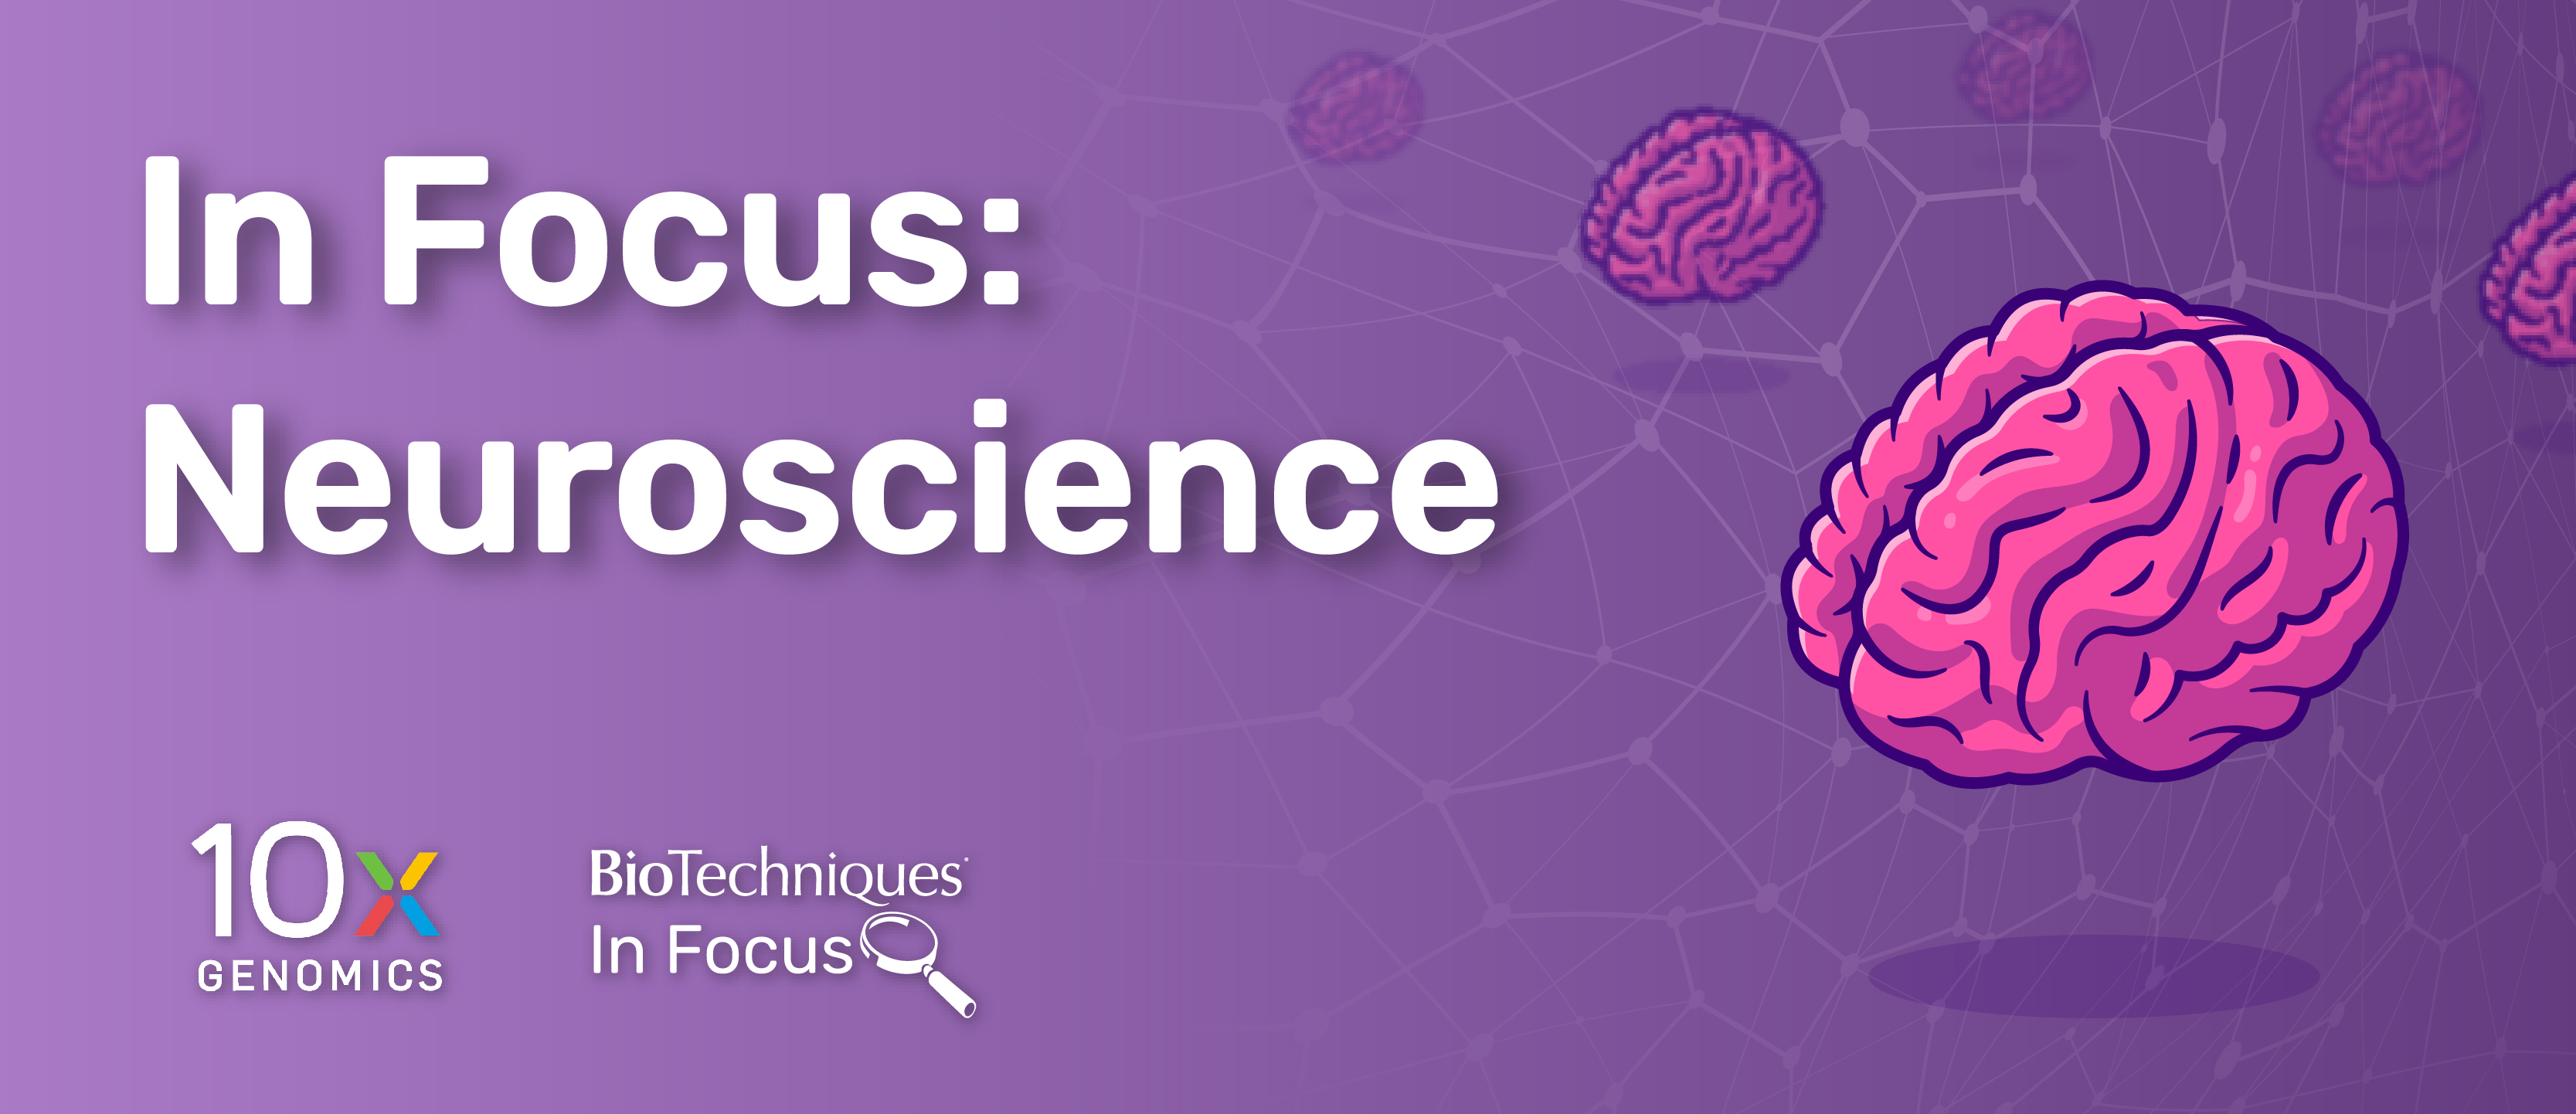 Neuroscience In Focus 10x Genomics header image